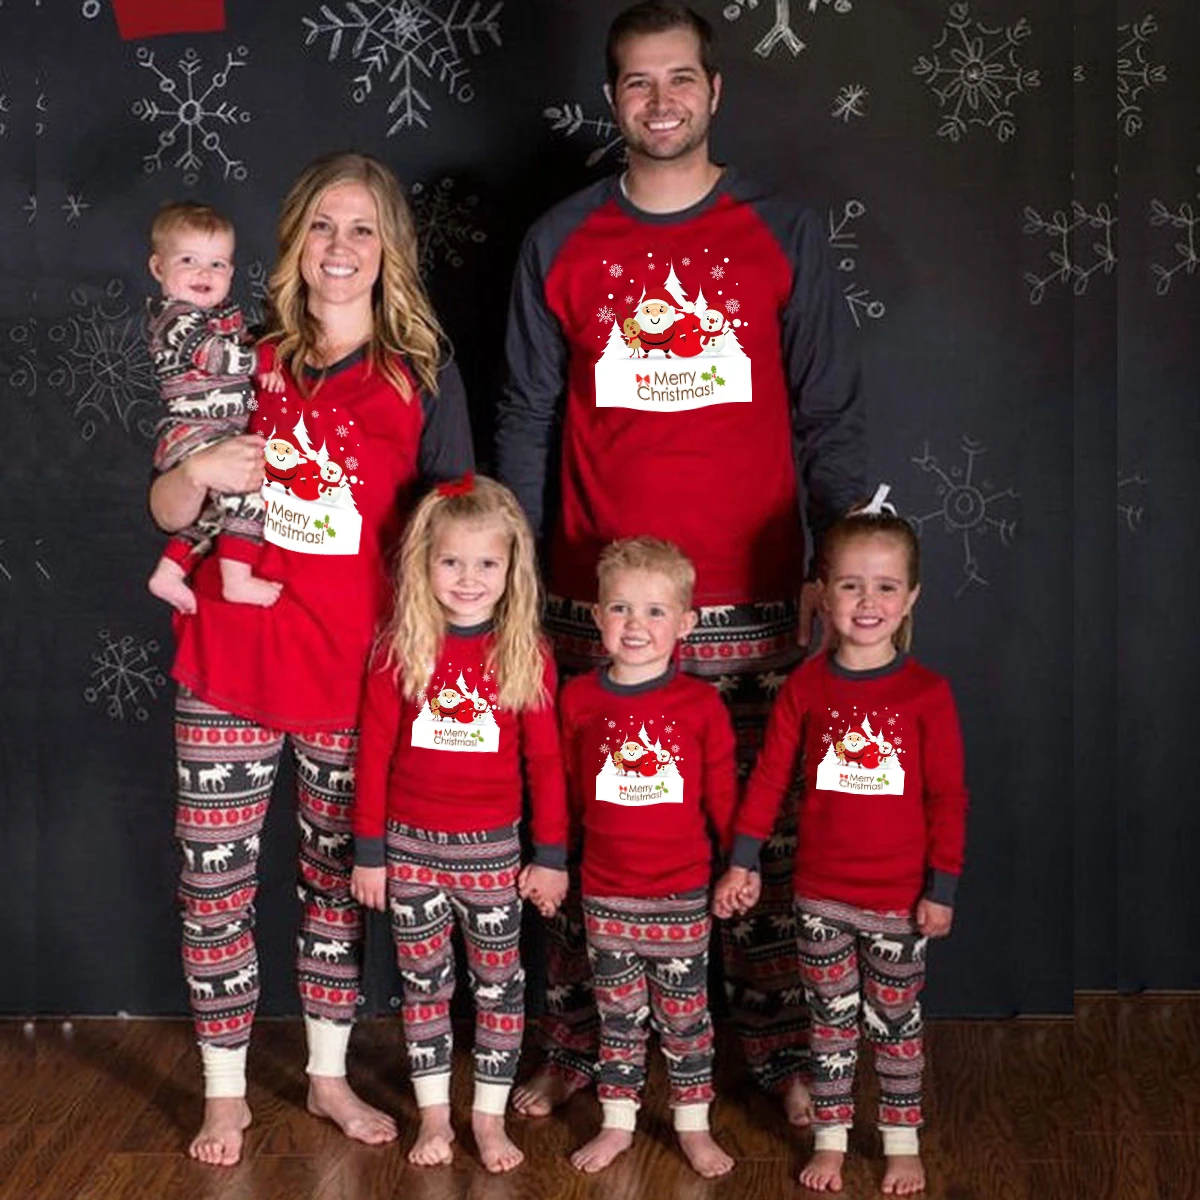 Christmas Pajamas Set Family Matching Sleepwear Adult Women Men Kid Boy Girl Cotton Top+Bottoms Pants Nightwear Outfit Plus Size | Мать и